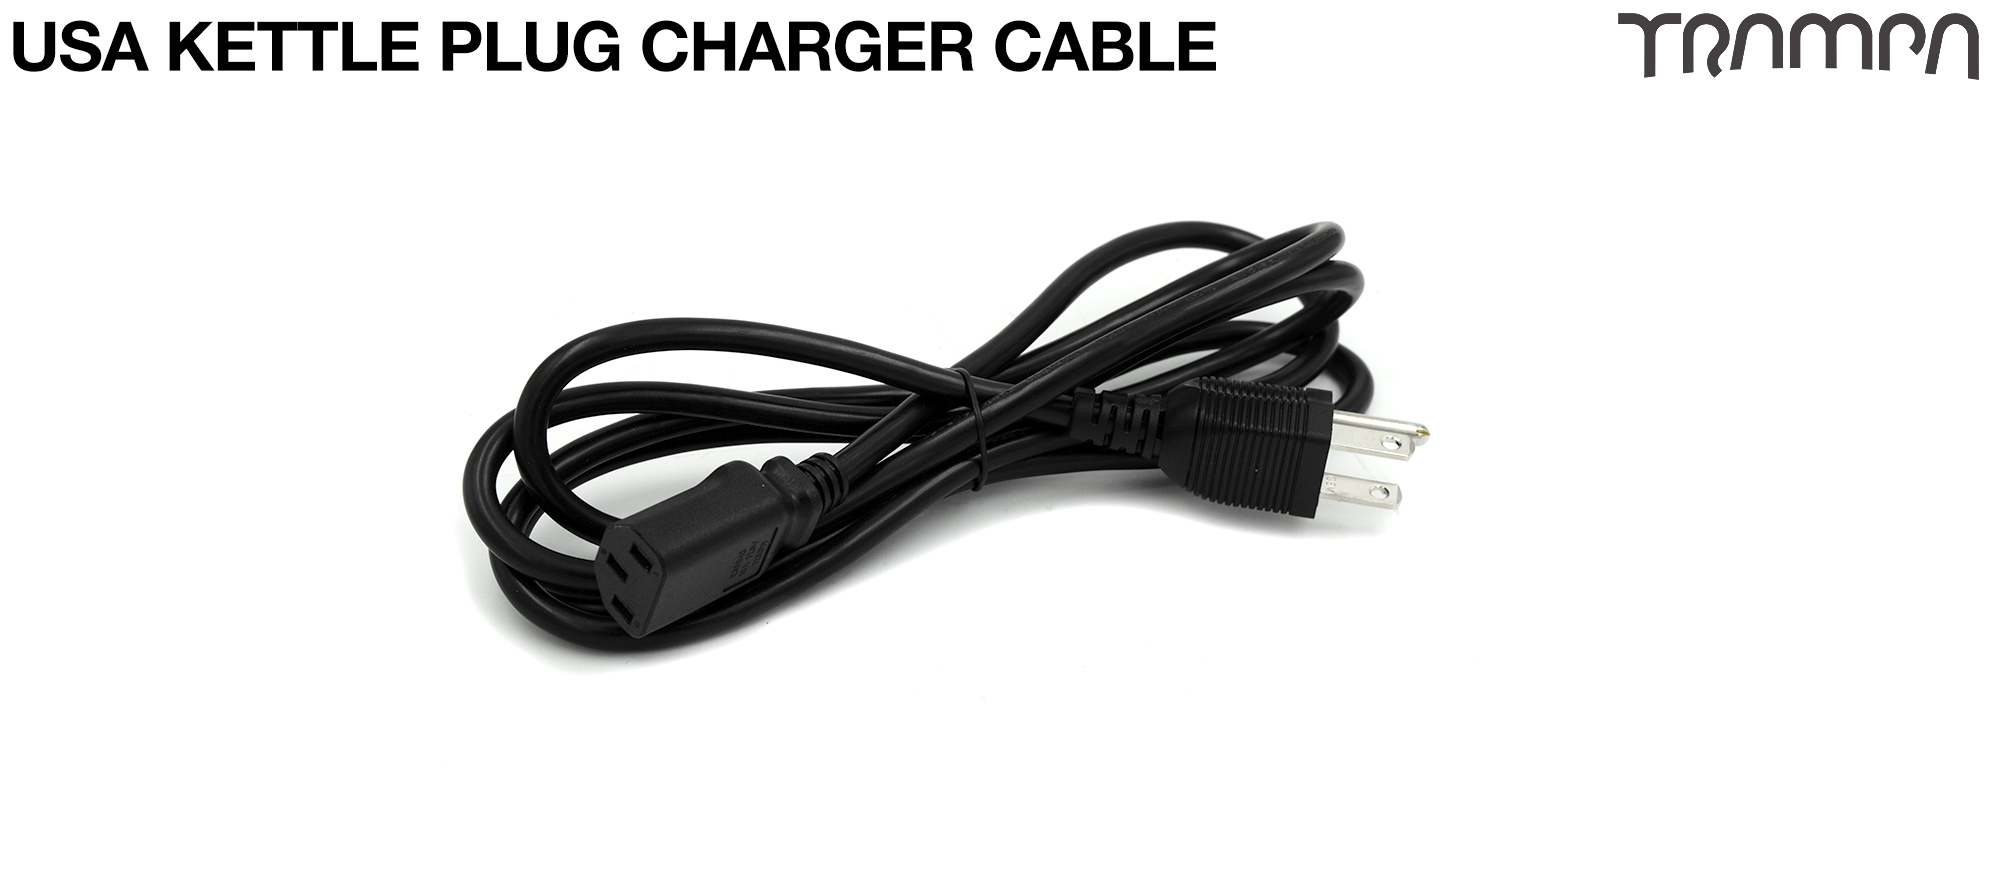 USA Kettle Plug Charger Cable 